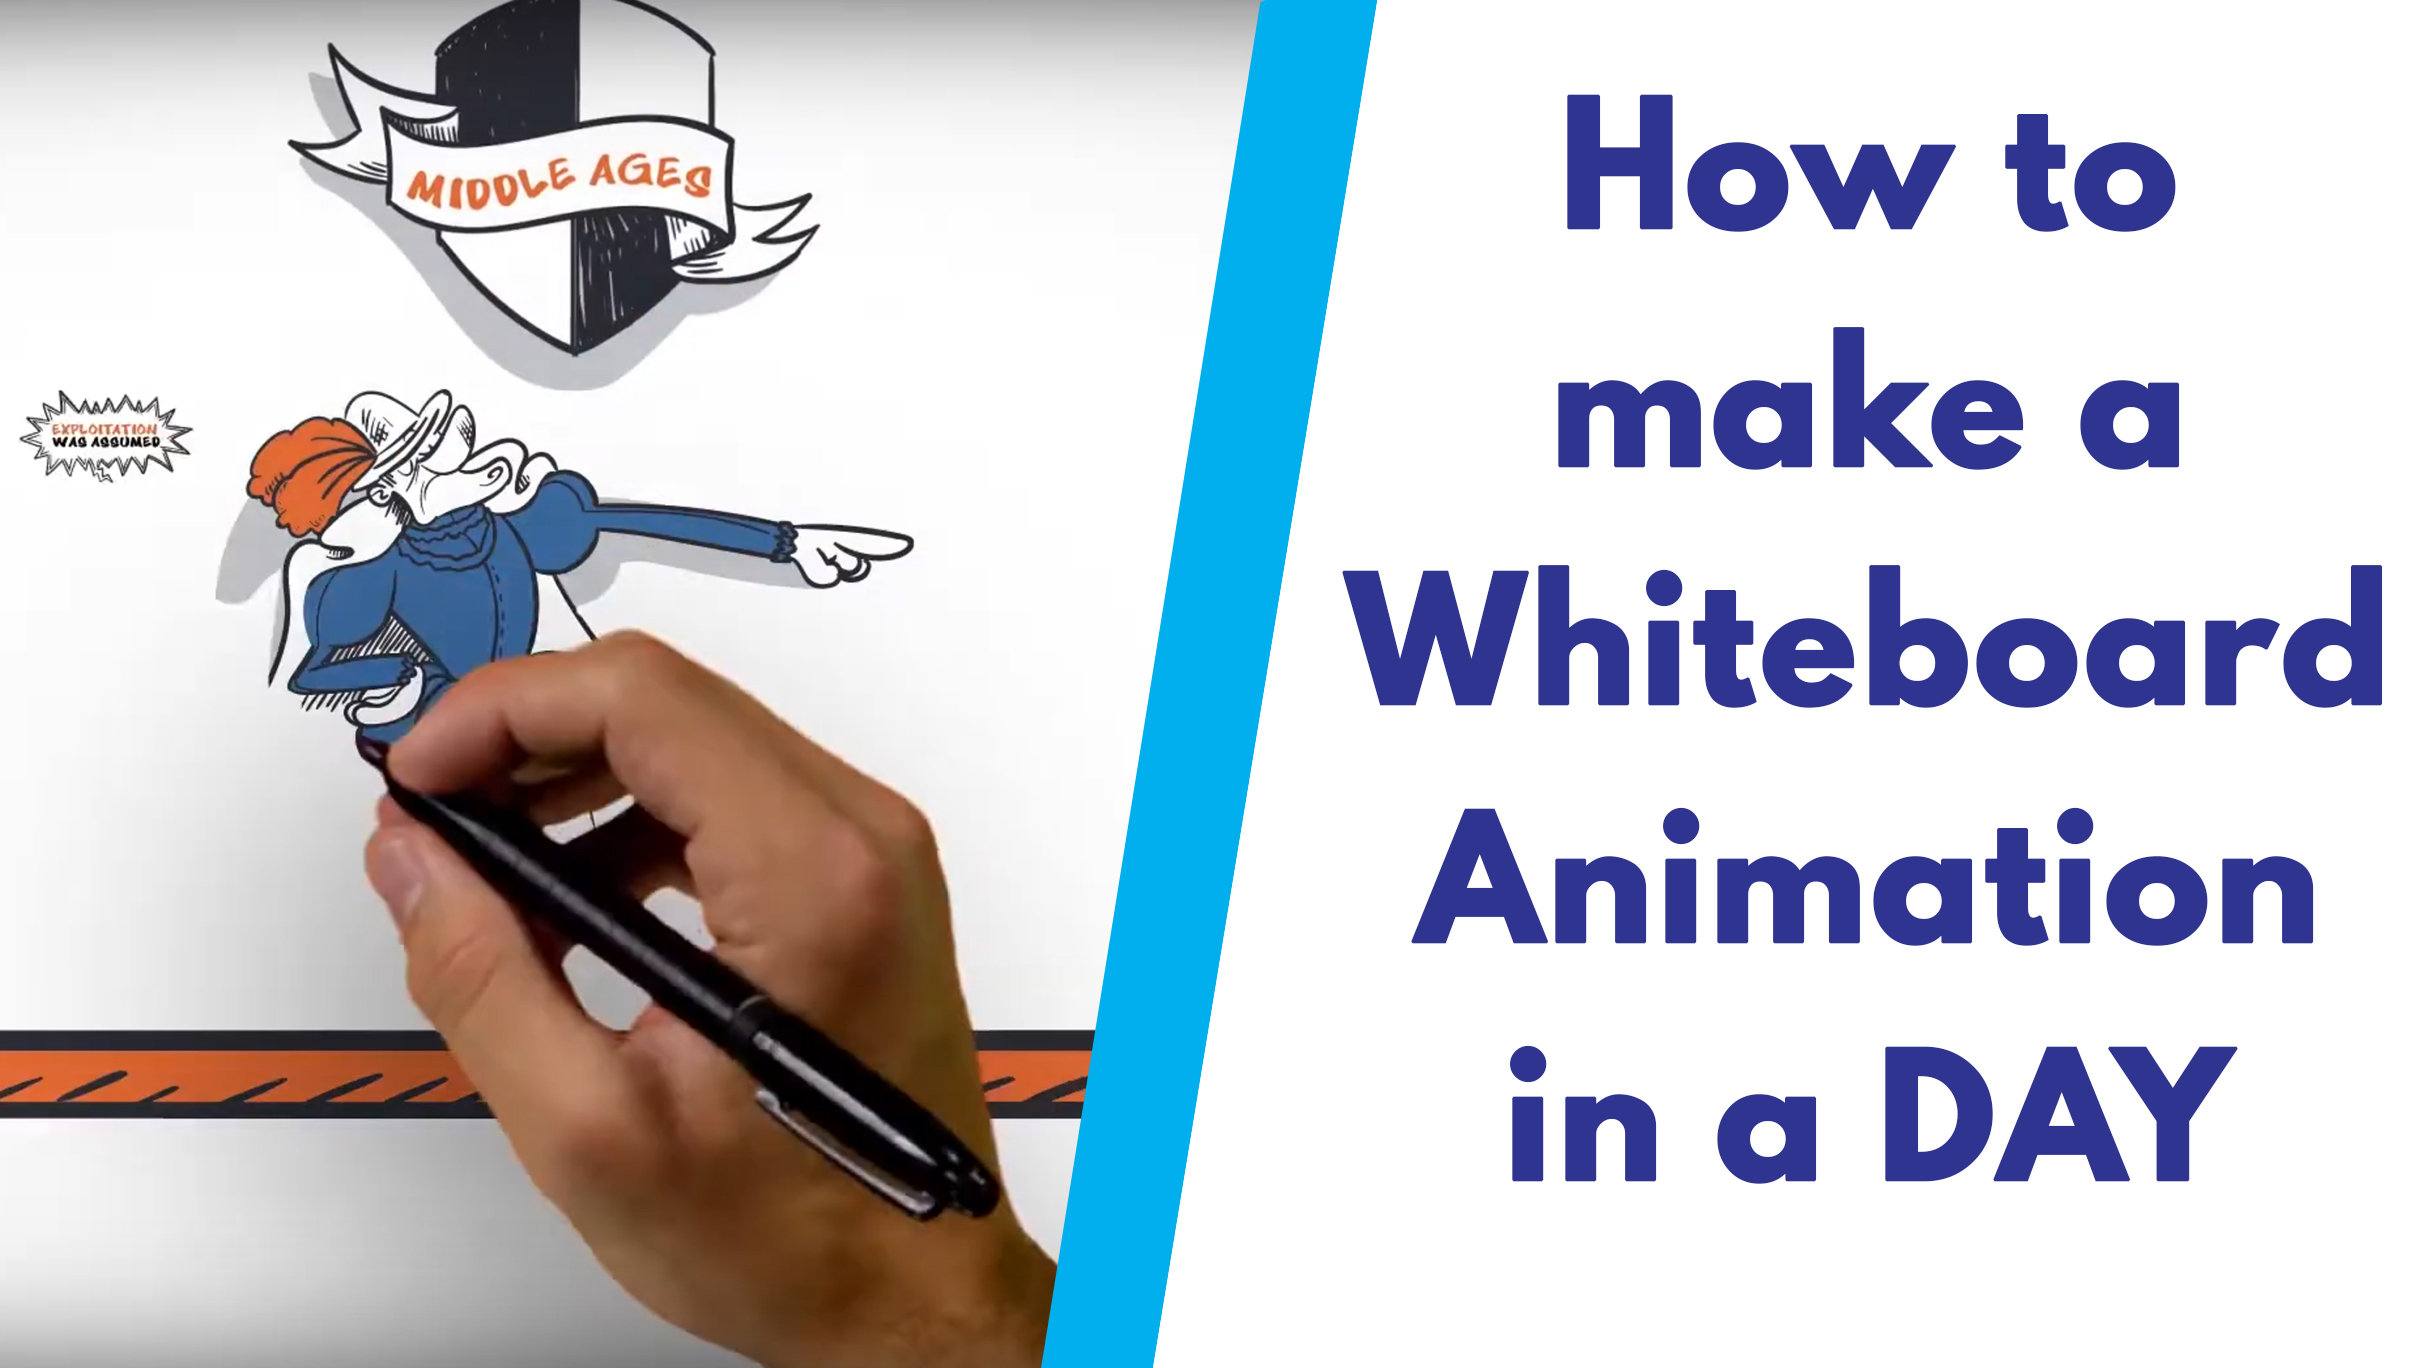 Whiteboard Animation and Explainer Video Blog | make whiteboard animation